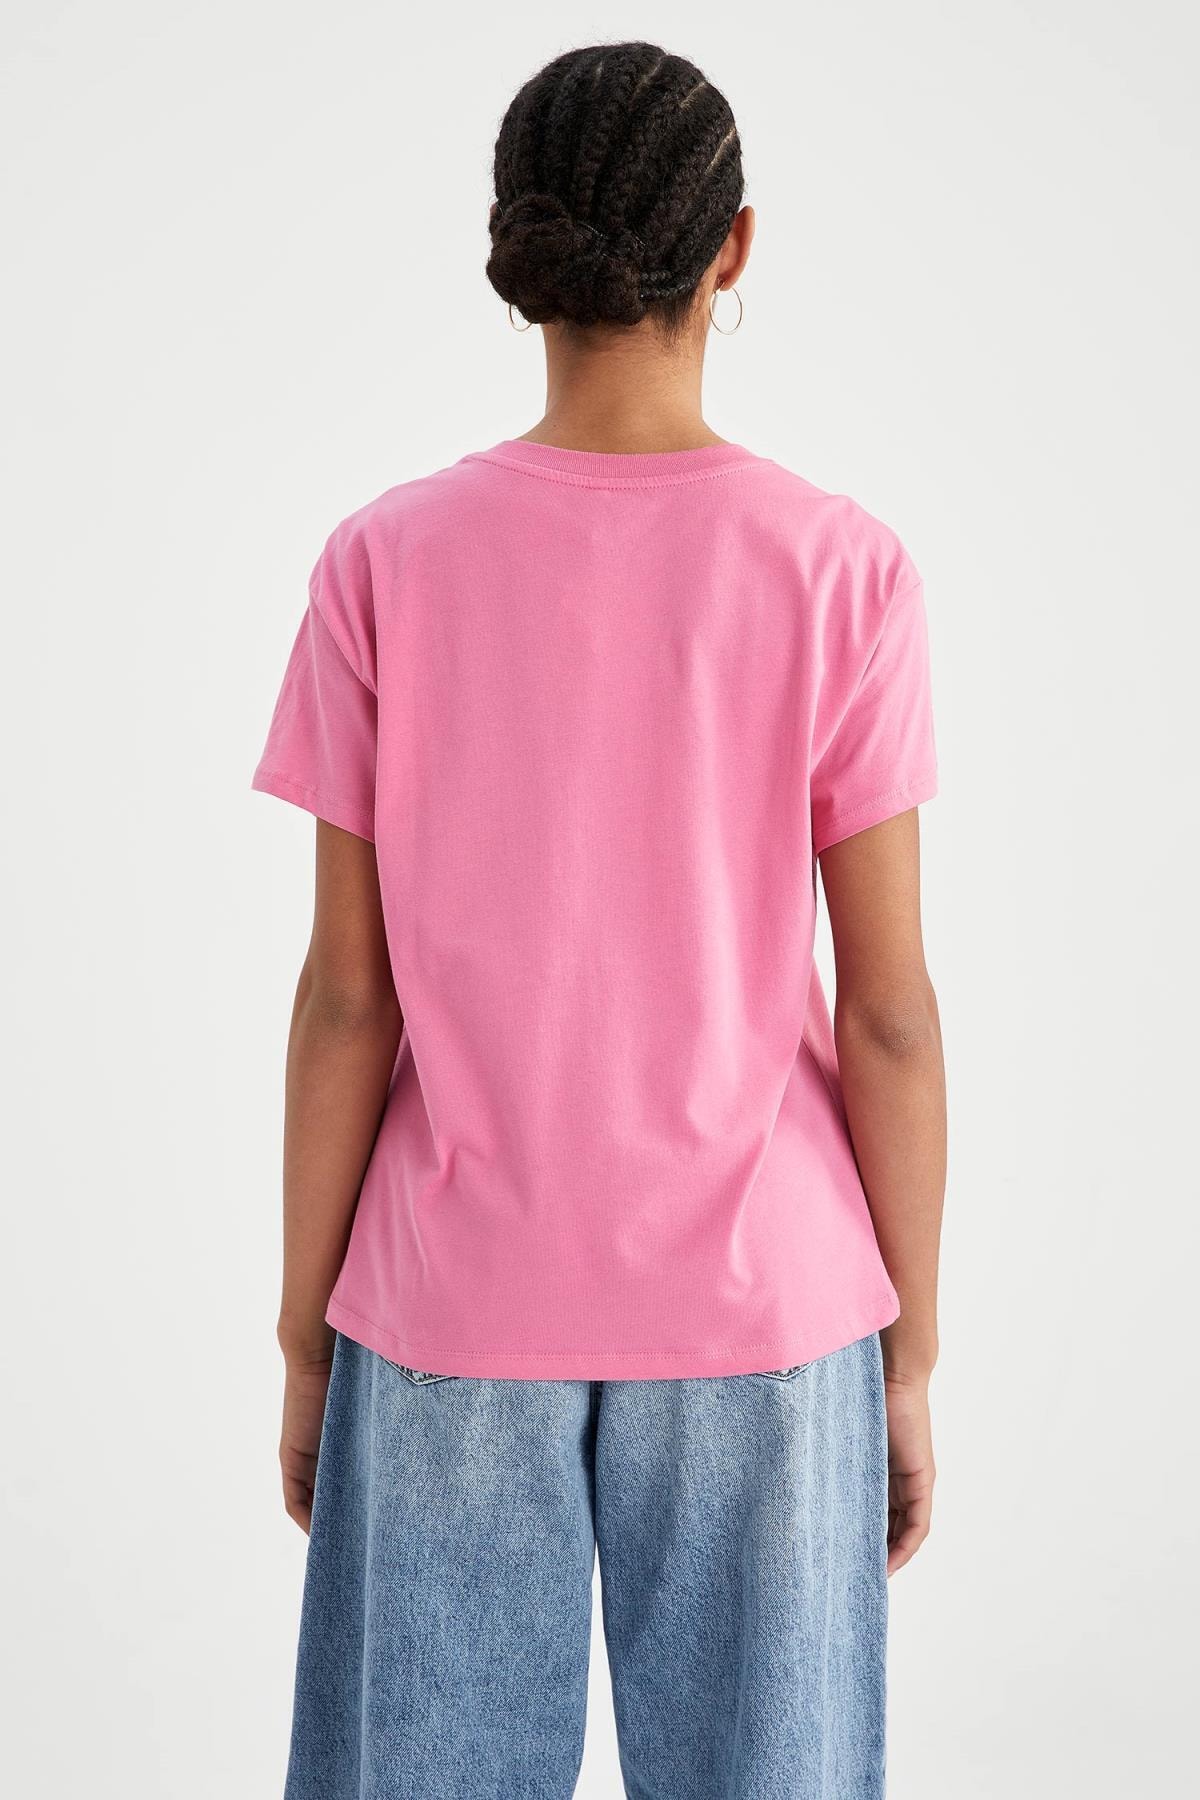 DeFacto T-Shirt Rosa Regular Fit Fast ausverkauft